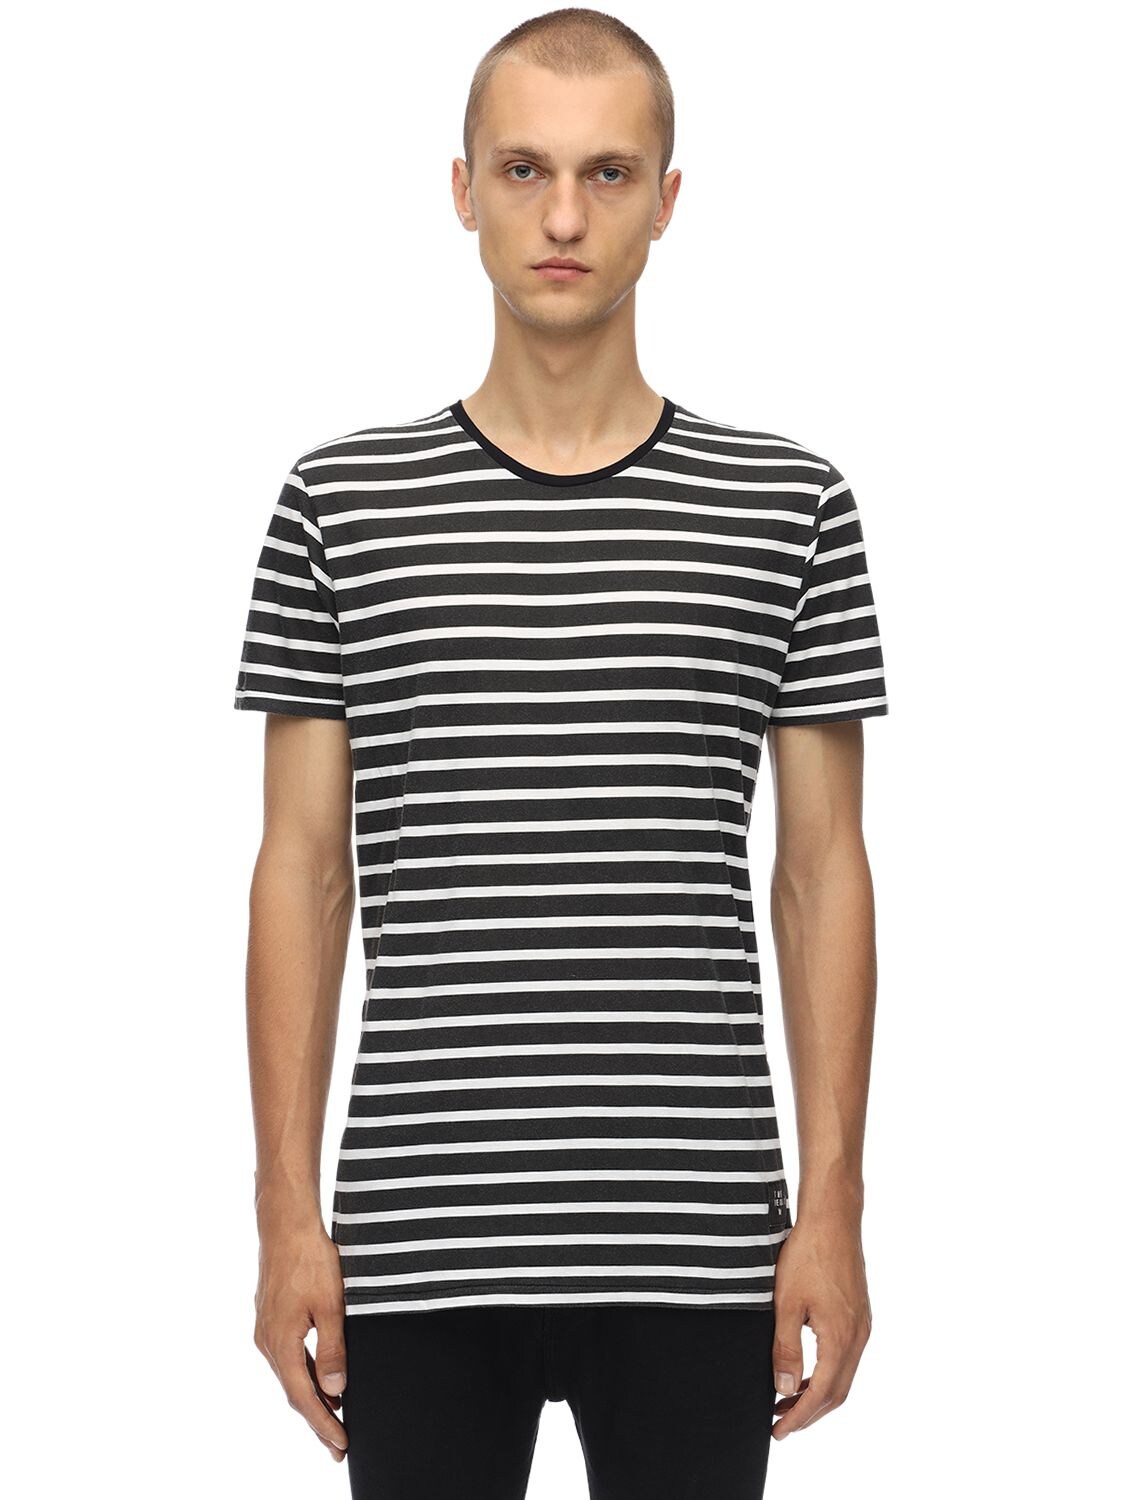 The People Vs Black & White Stripe Jersey T-shirt In Black,white